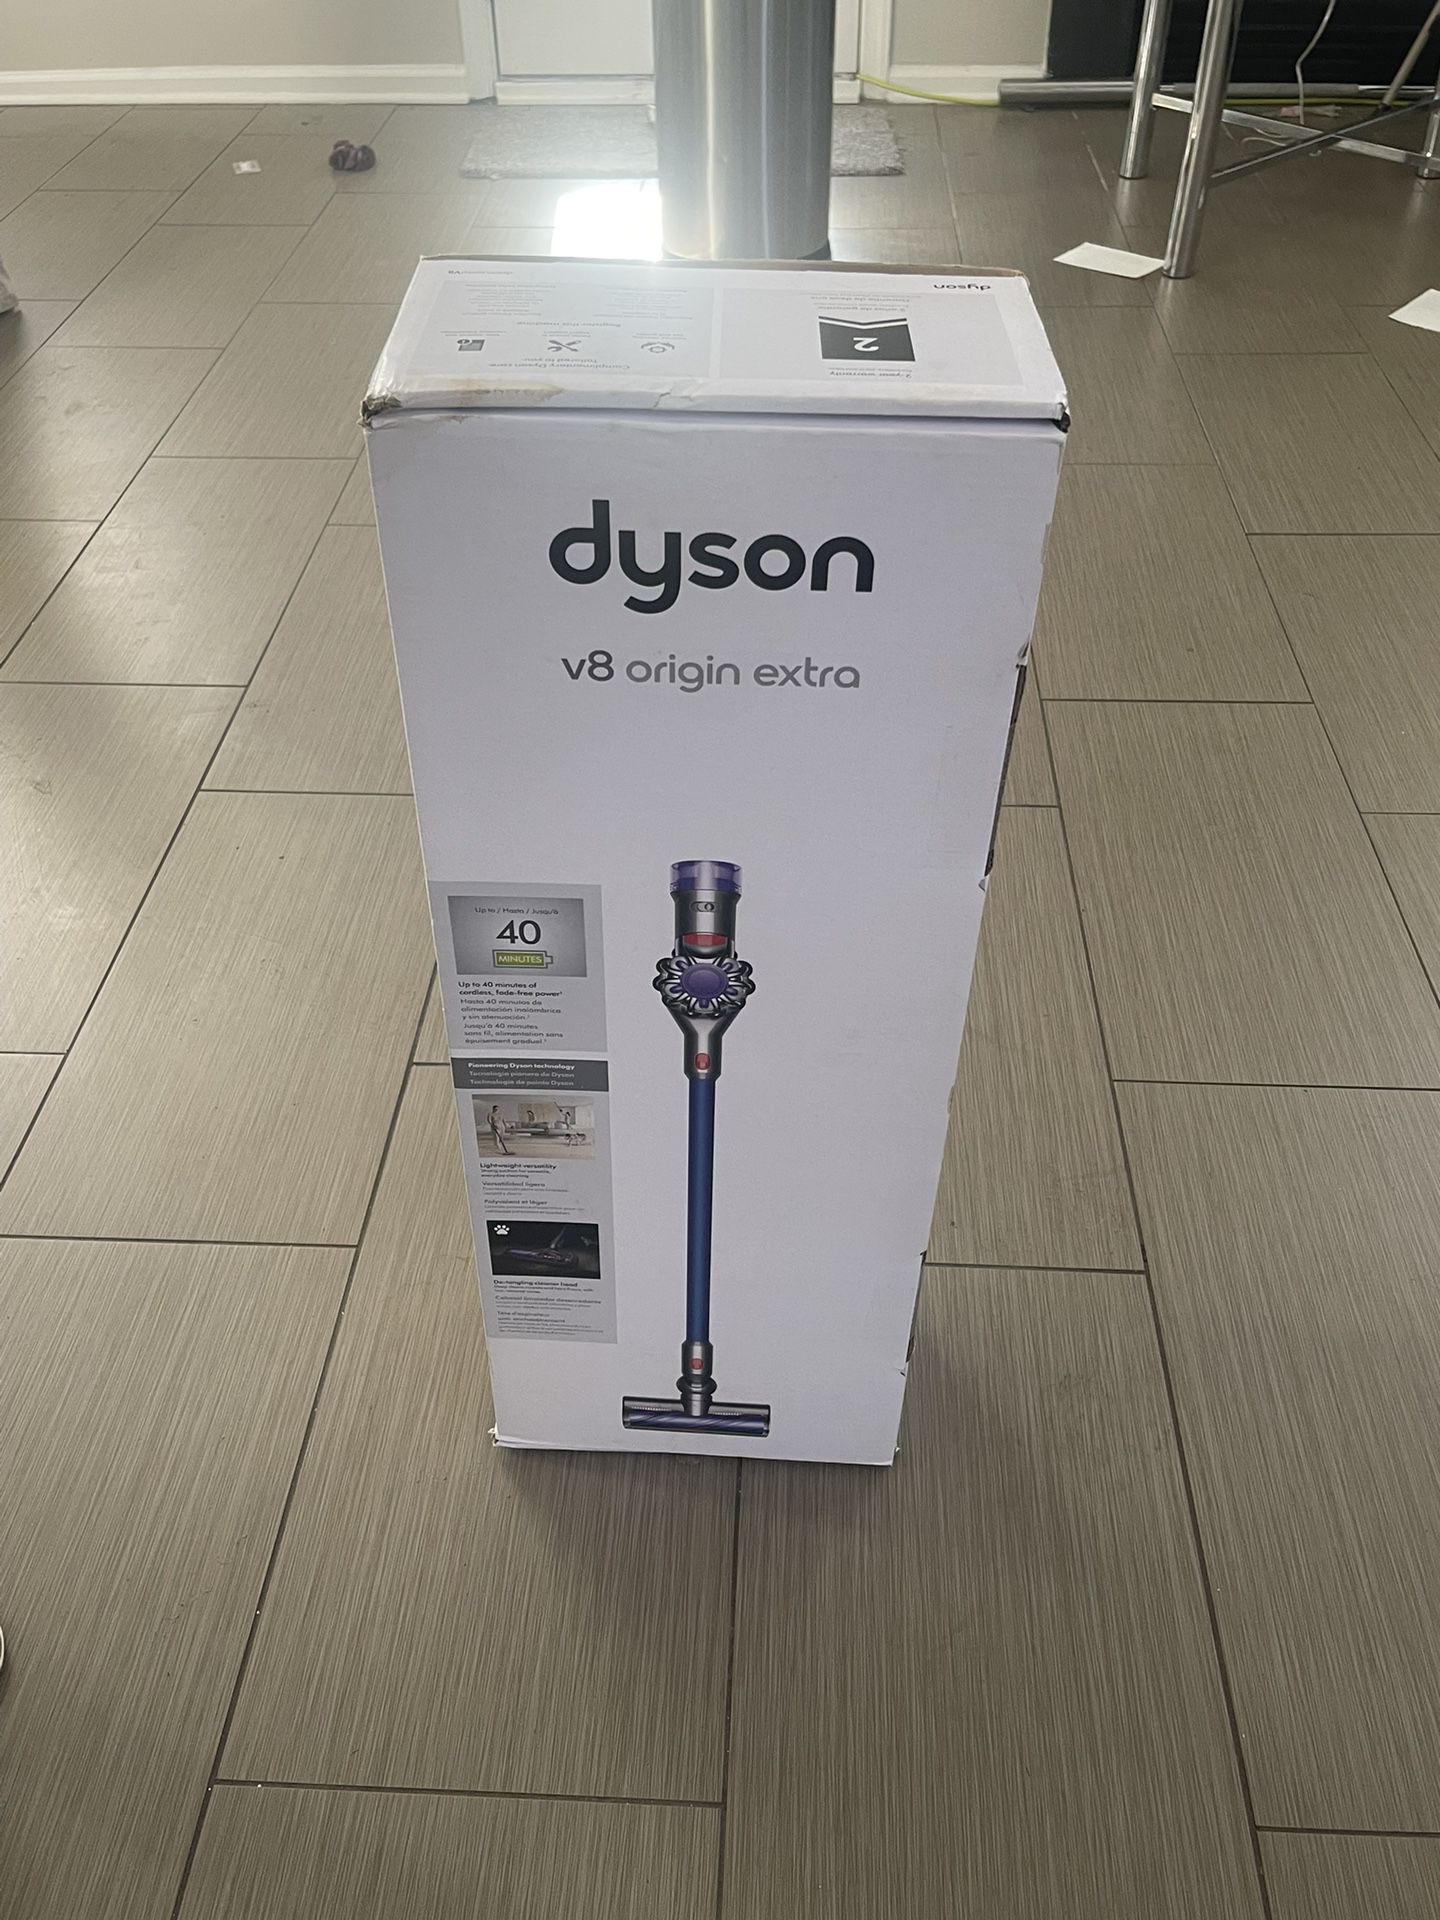 dyson v8 origin extra cordless vacuum cleaner 